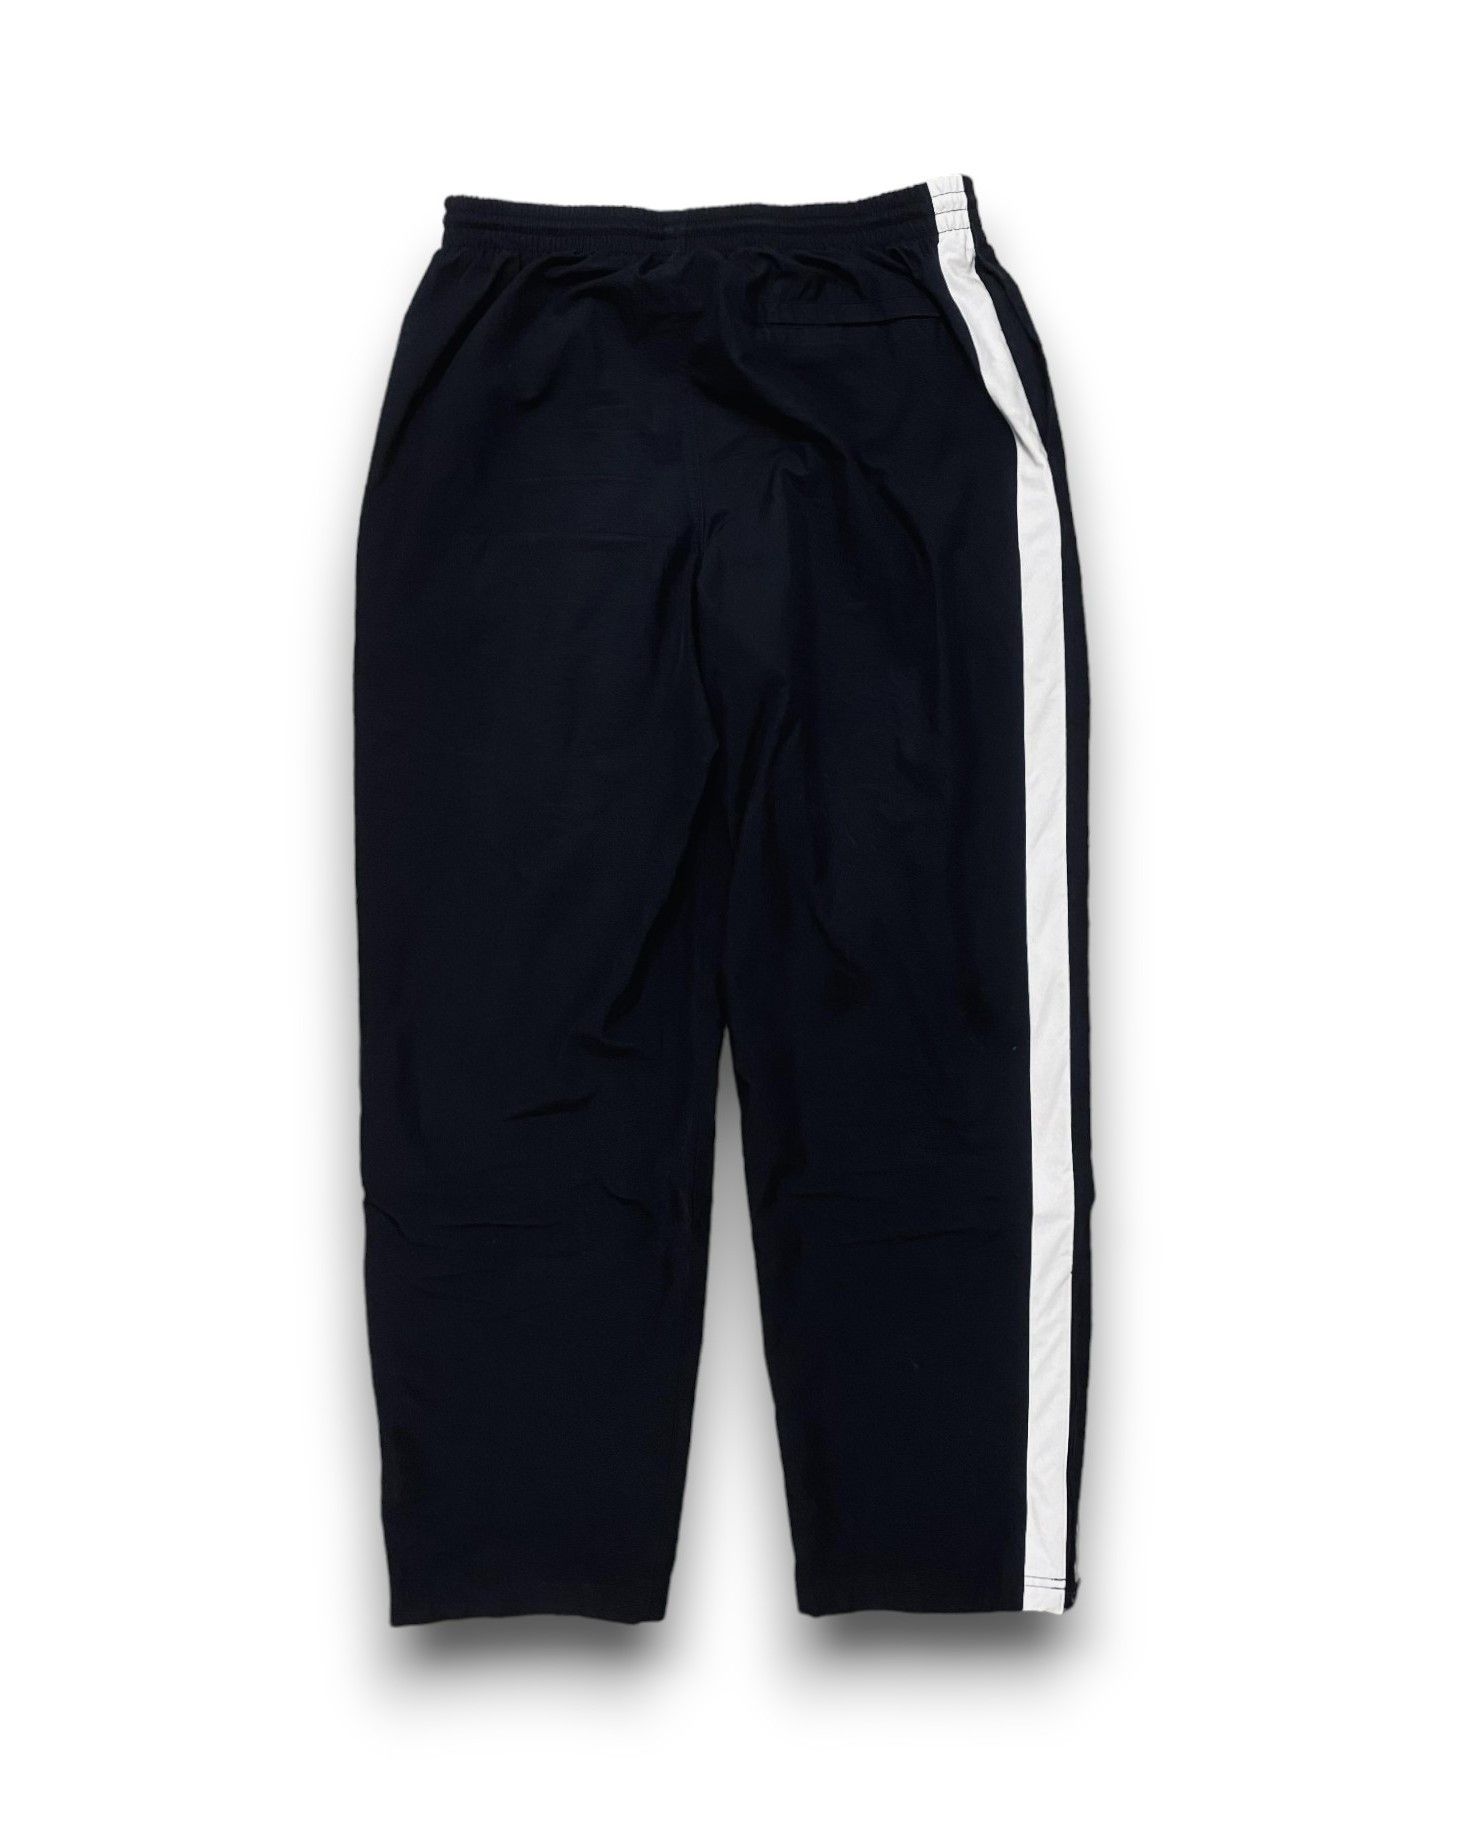 Nike Track Pants Y2K Black Side Stripe Men's L - 10